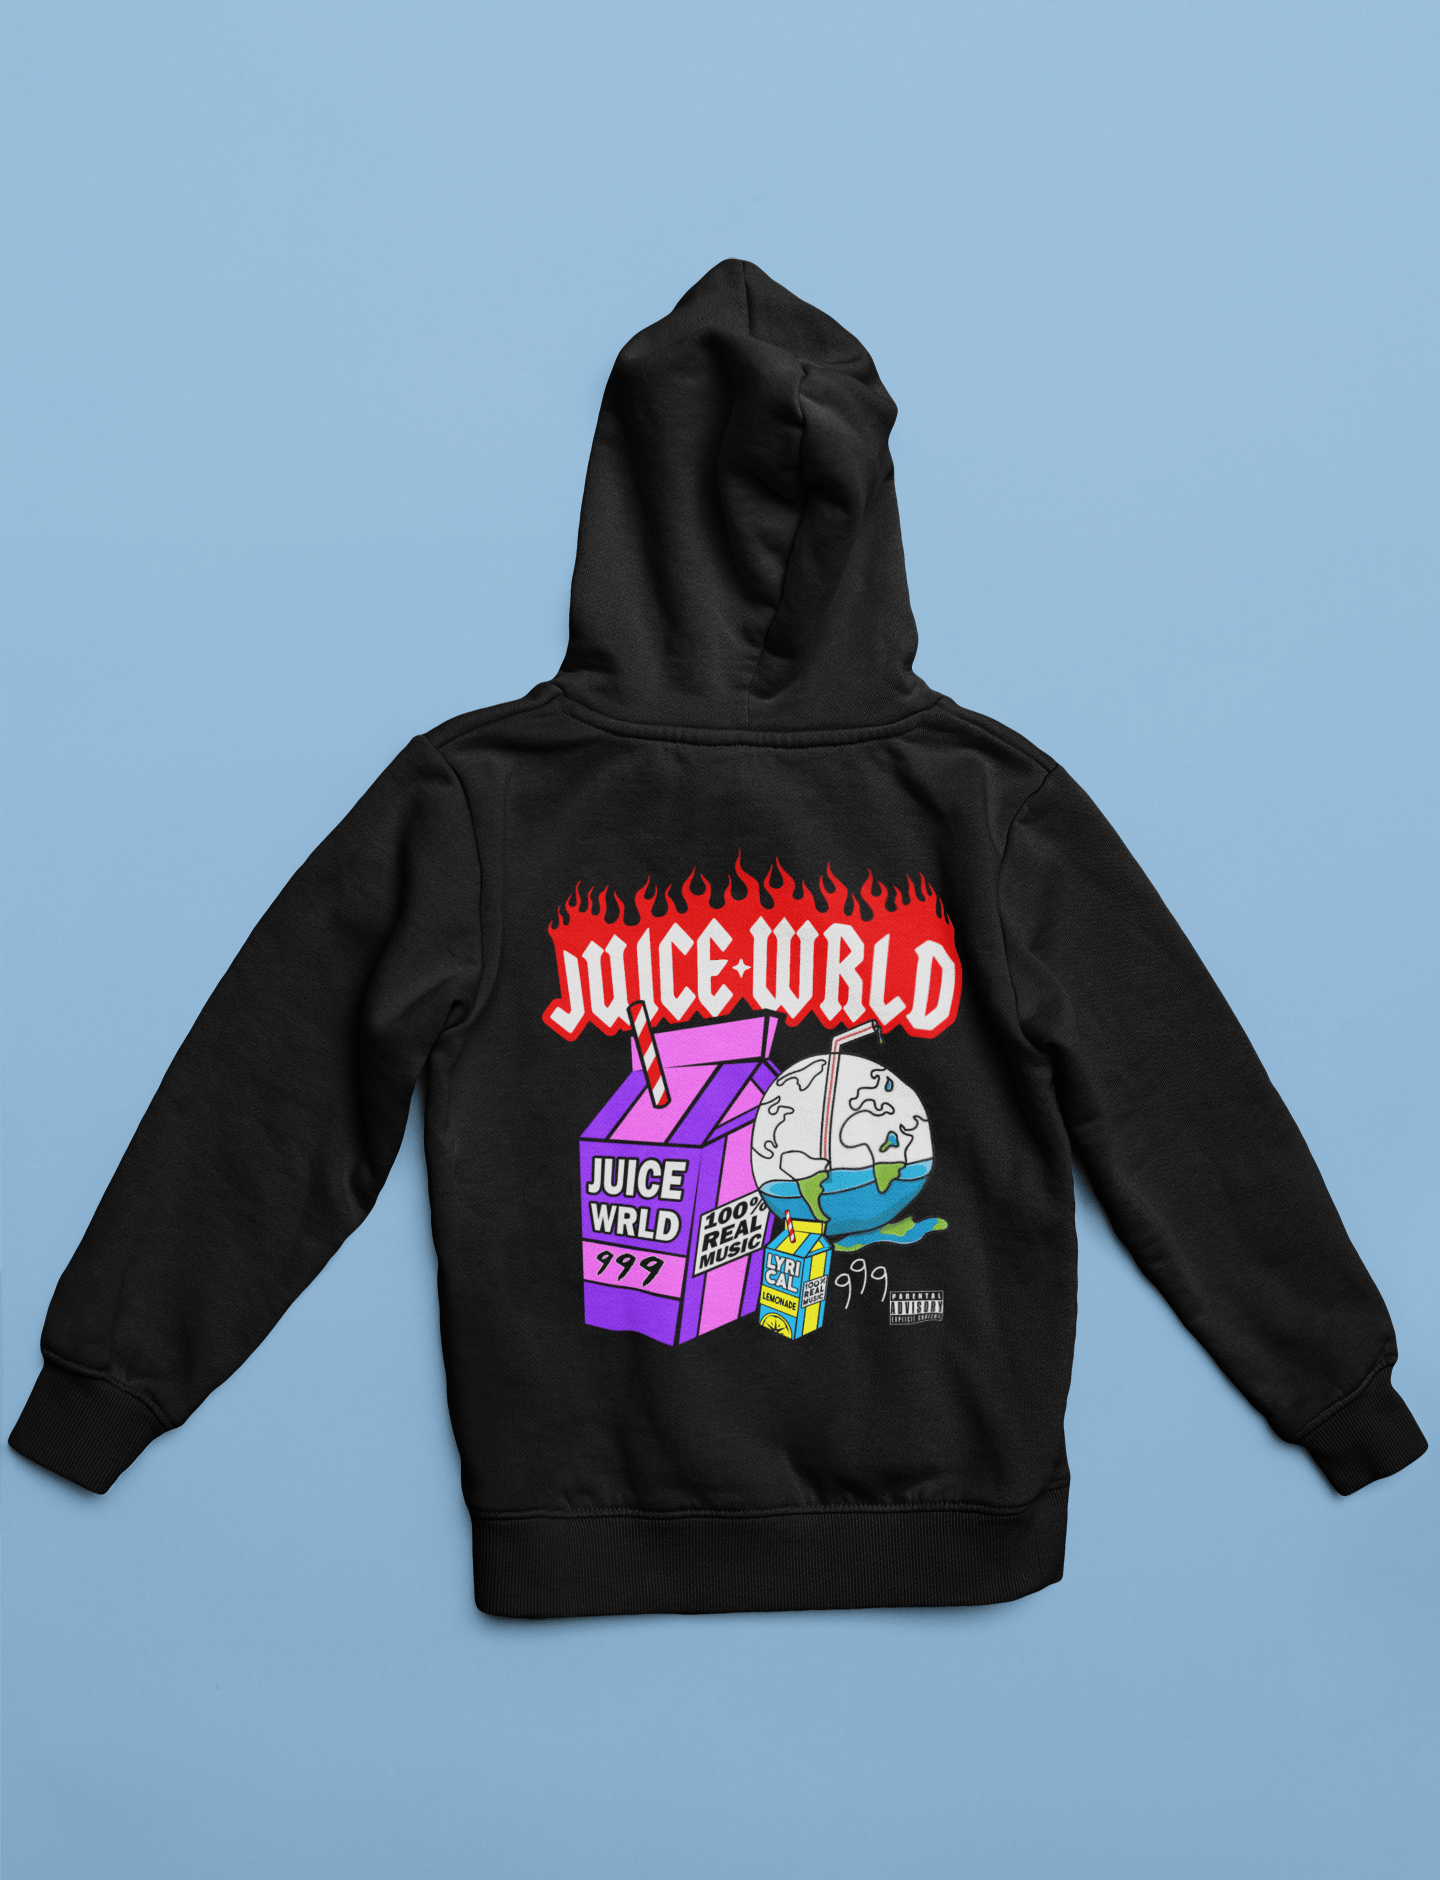 AILLING ARCH-"Juice Wrld" Unisex Graphic Hoodie (Black)